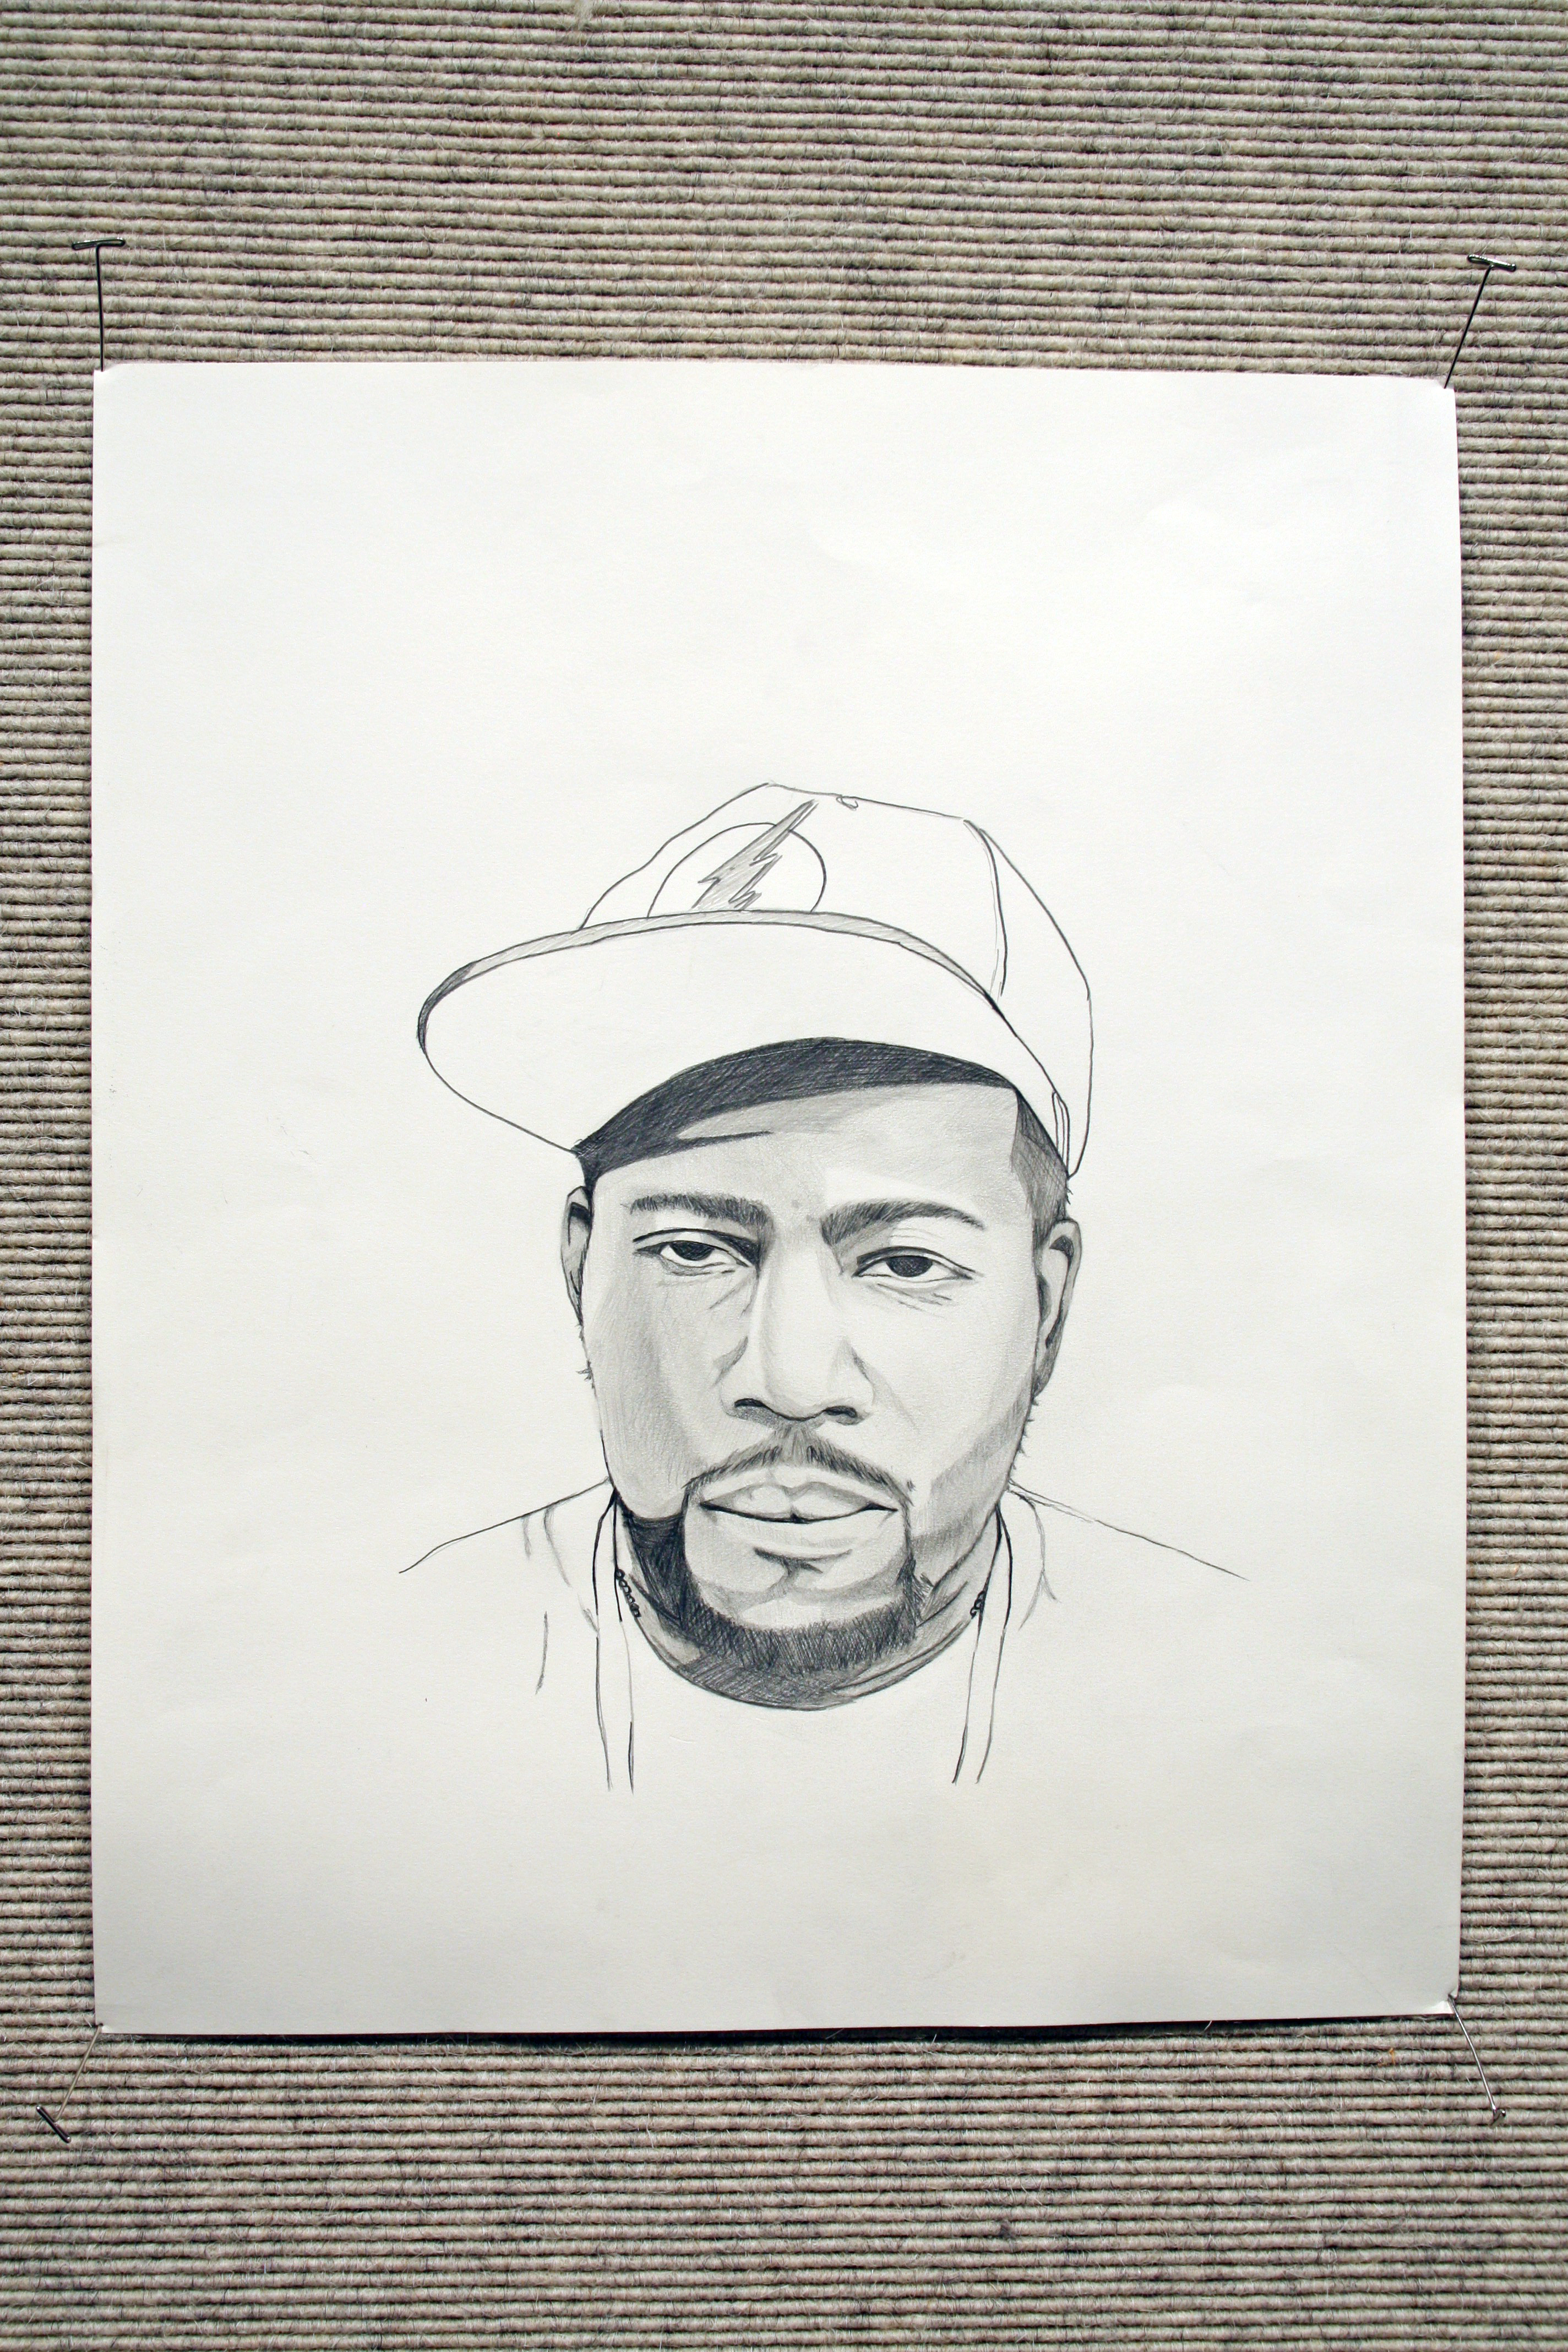 Sketch of self-portrait of Angelo Britt wearing a baseball cap.